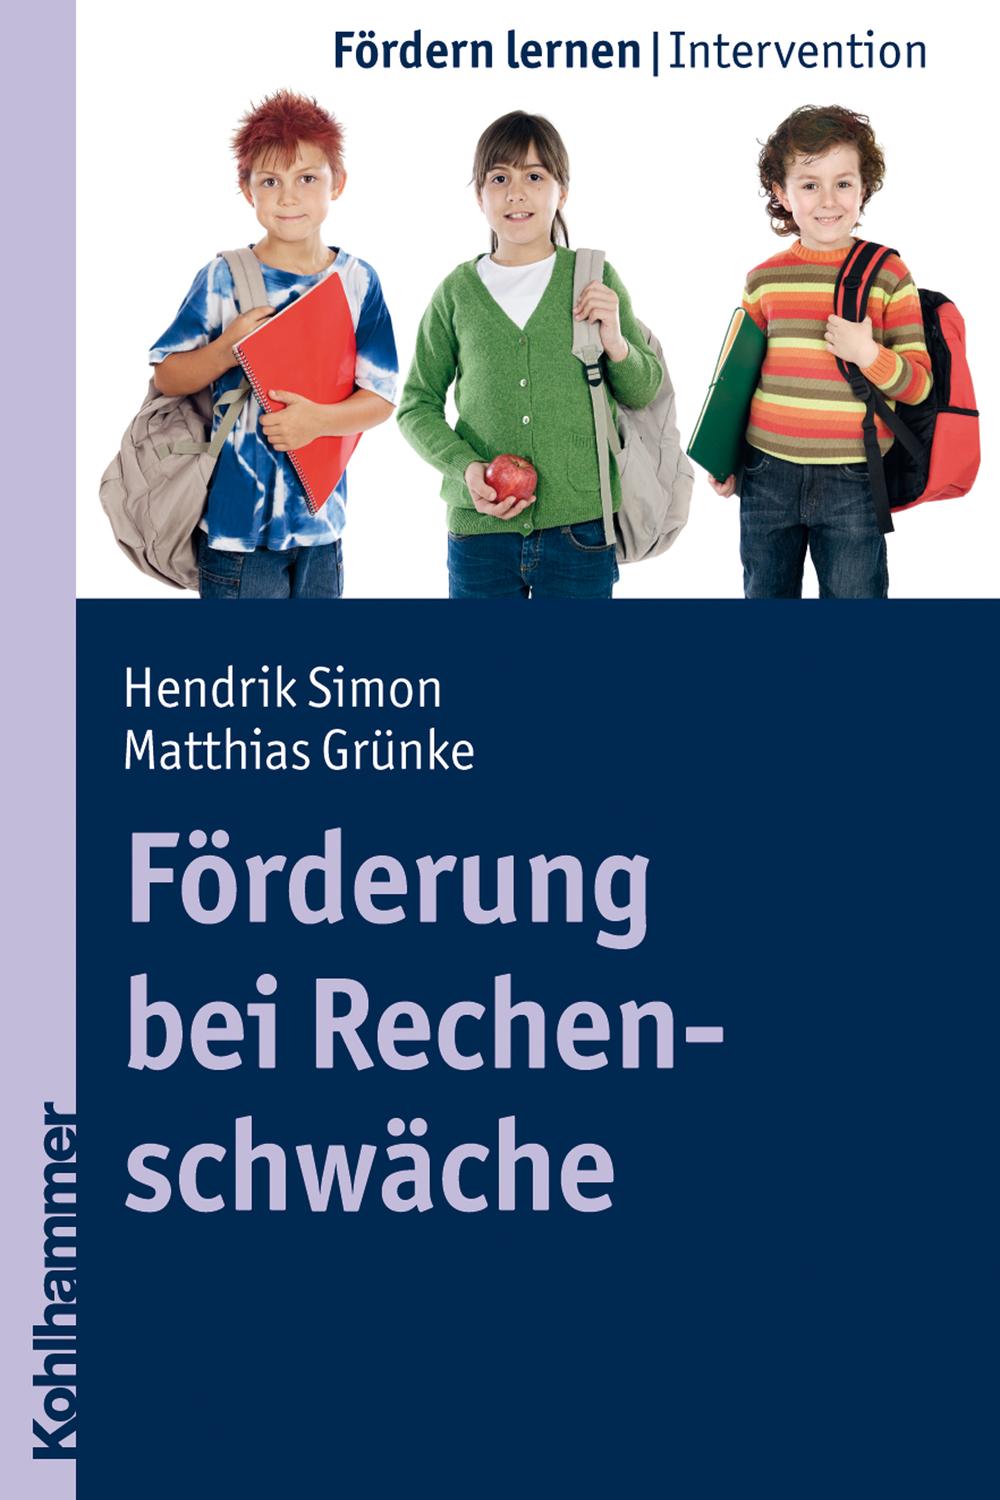 Förderung bei Rechenschwäche - Hendrik Simon, Matthias Grünke